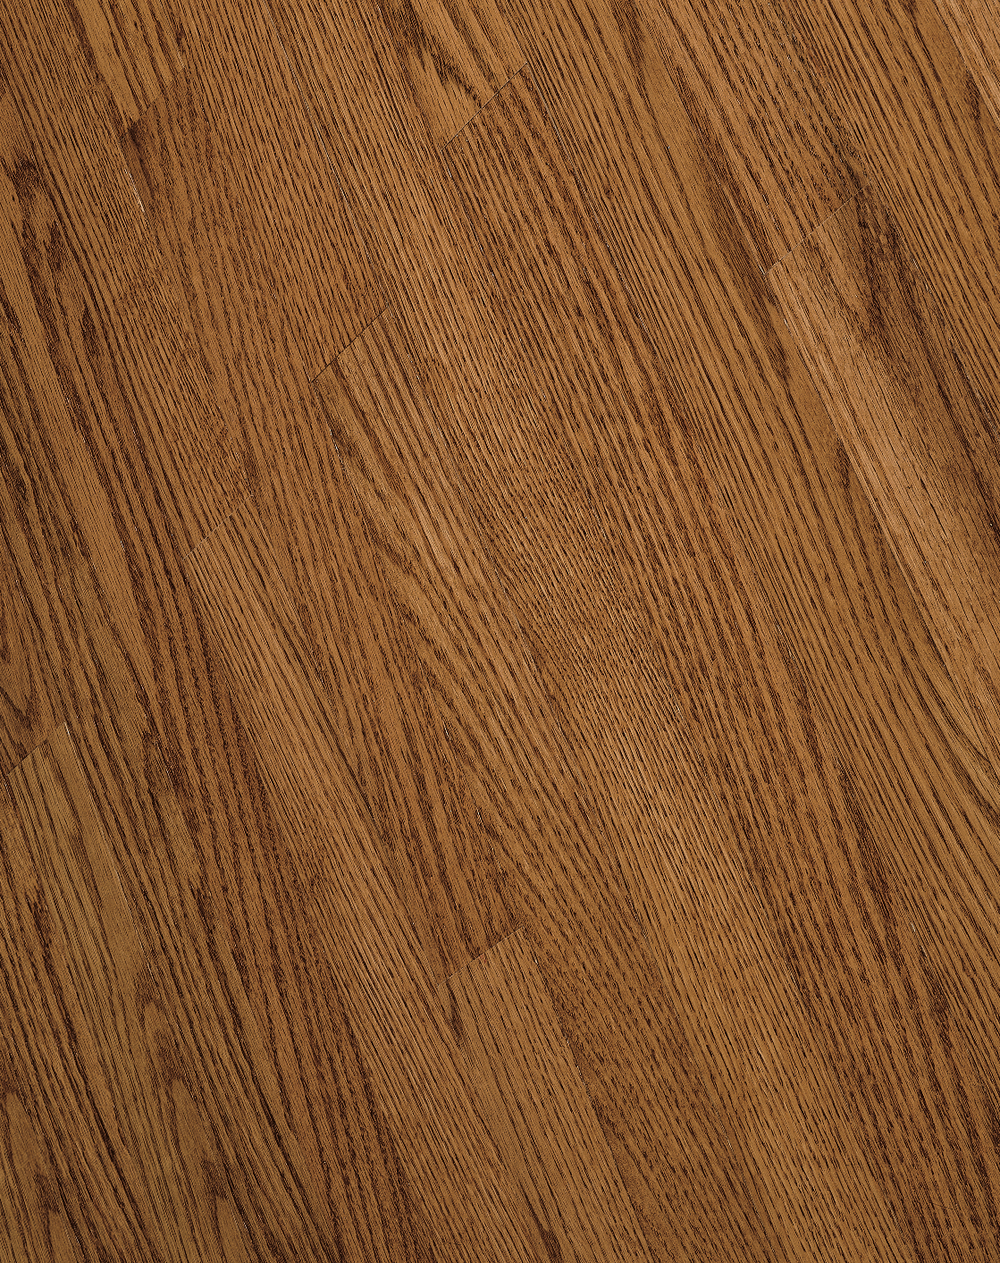 Gunstock Oak 2 1/4" - Fulton Collection - Solid Hardwood Flooring by Bruce